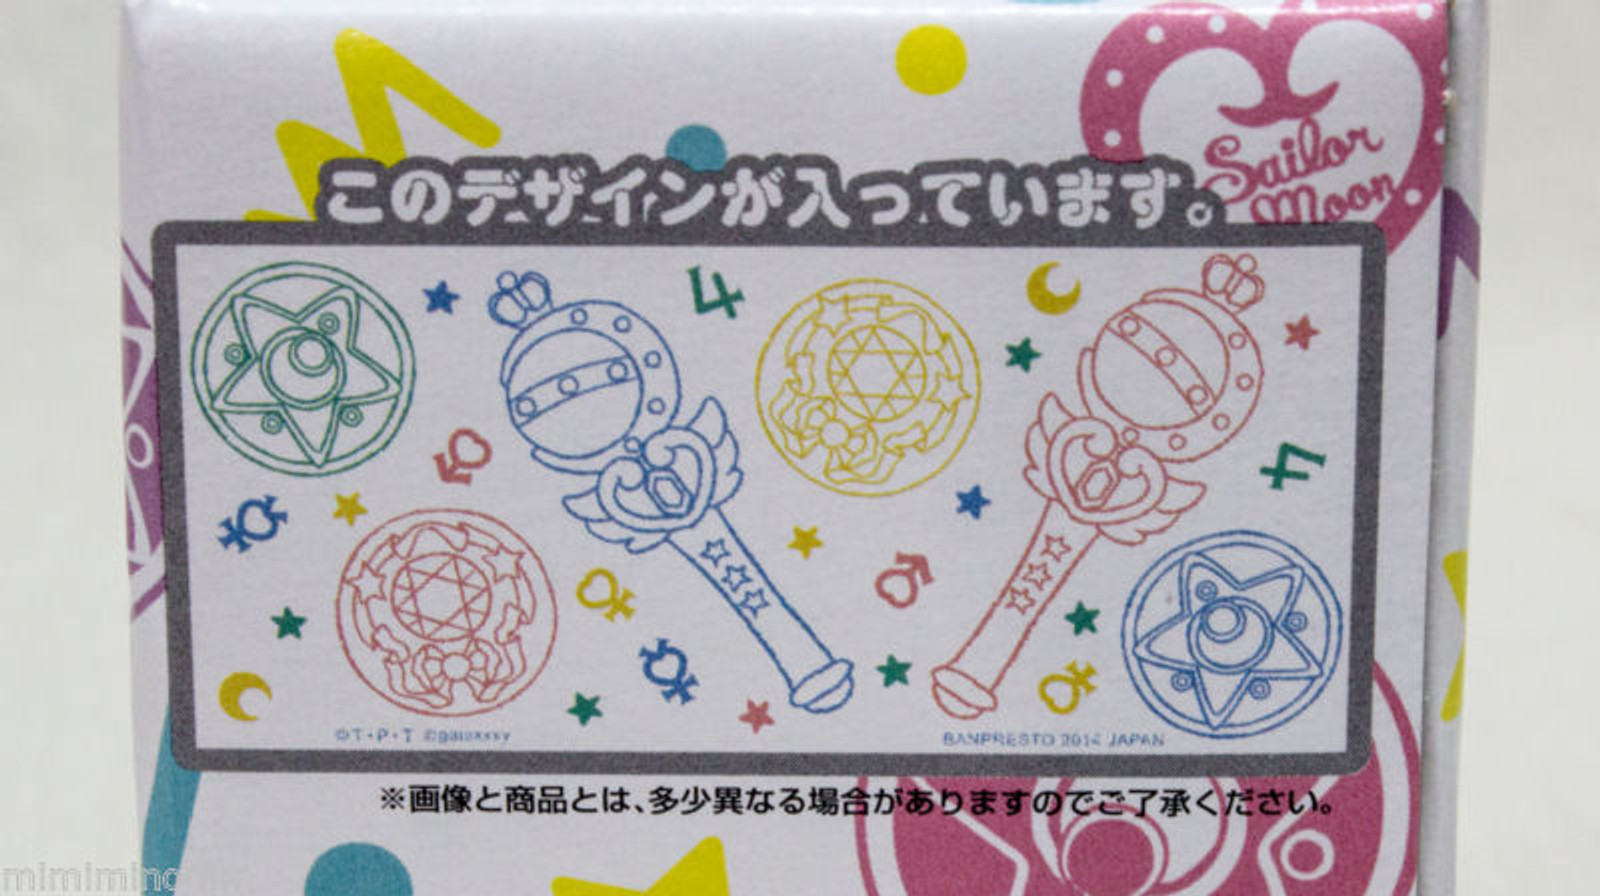 Sailor Moon Cutie moon rod & Crystal star brooch Collection Glass - Galaxxxy Collaboration - Ichiban Kuji [E] JAPAN ANIME